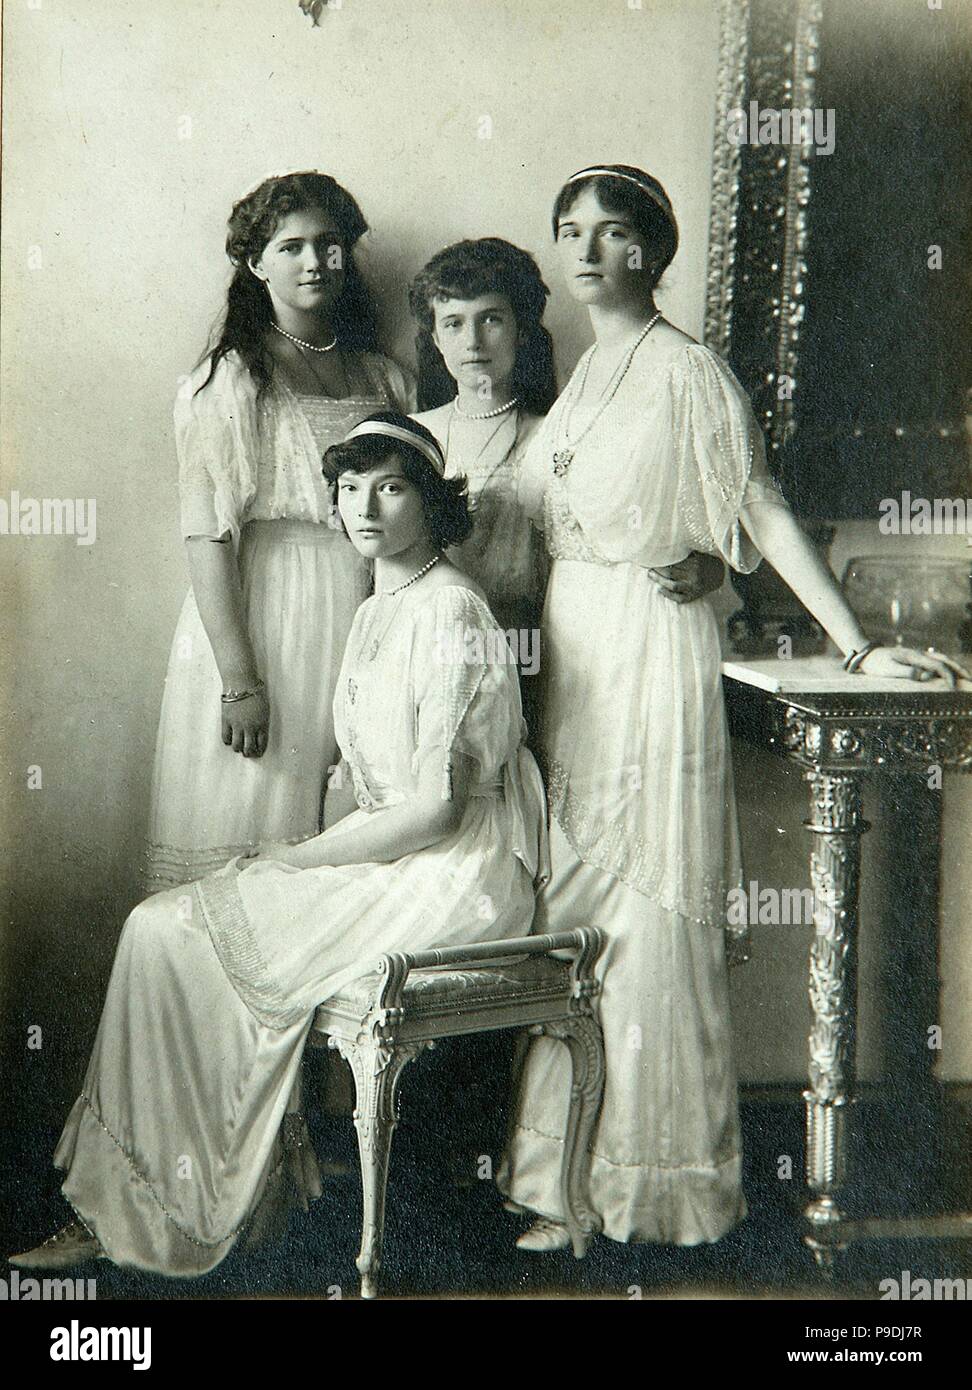 Grand duchess anastasia nikolaevna of russia hi-res stock photography and  images - Alamy